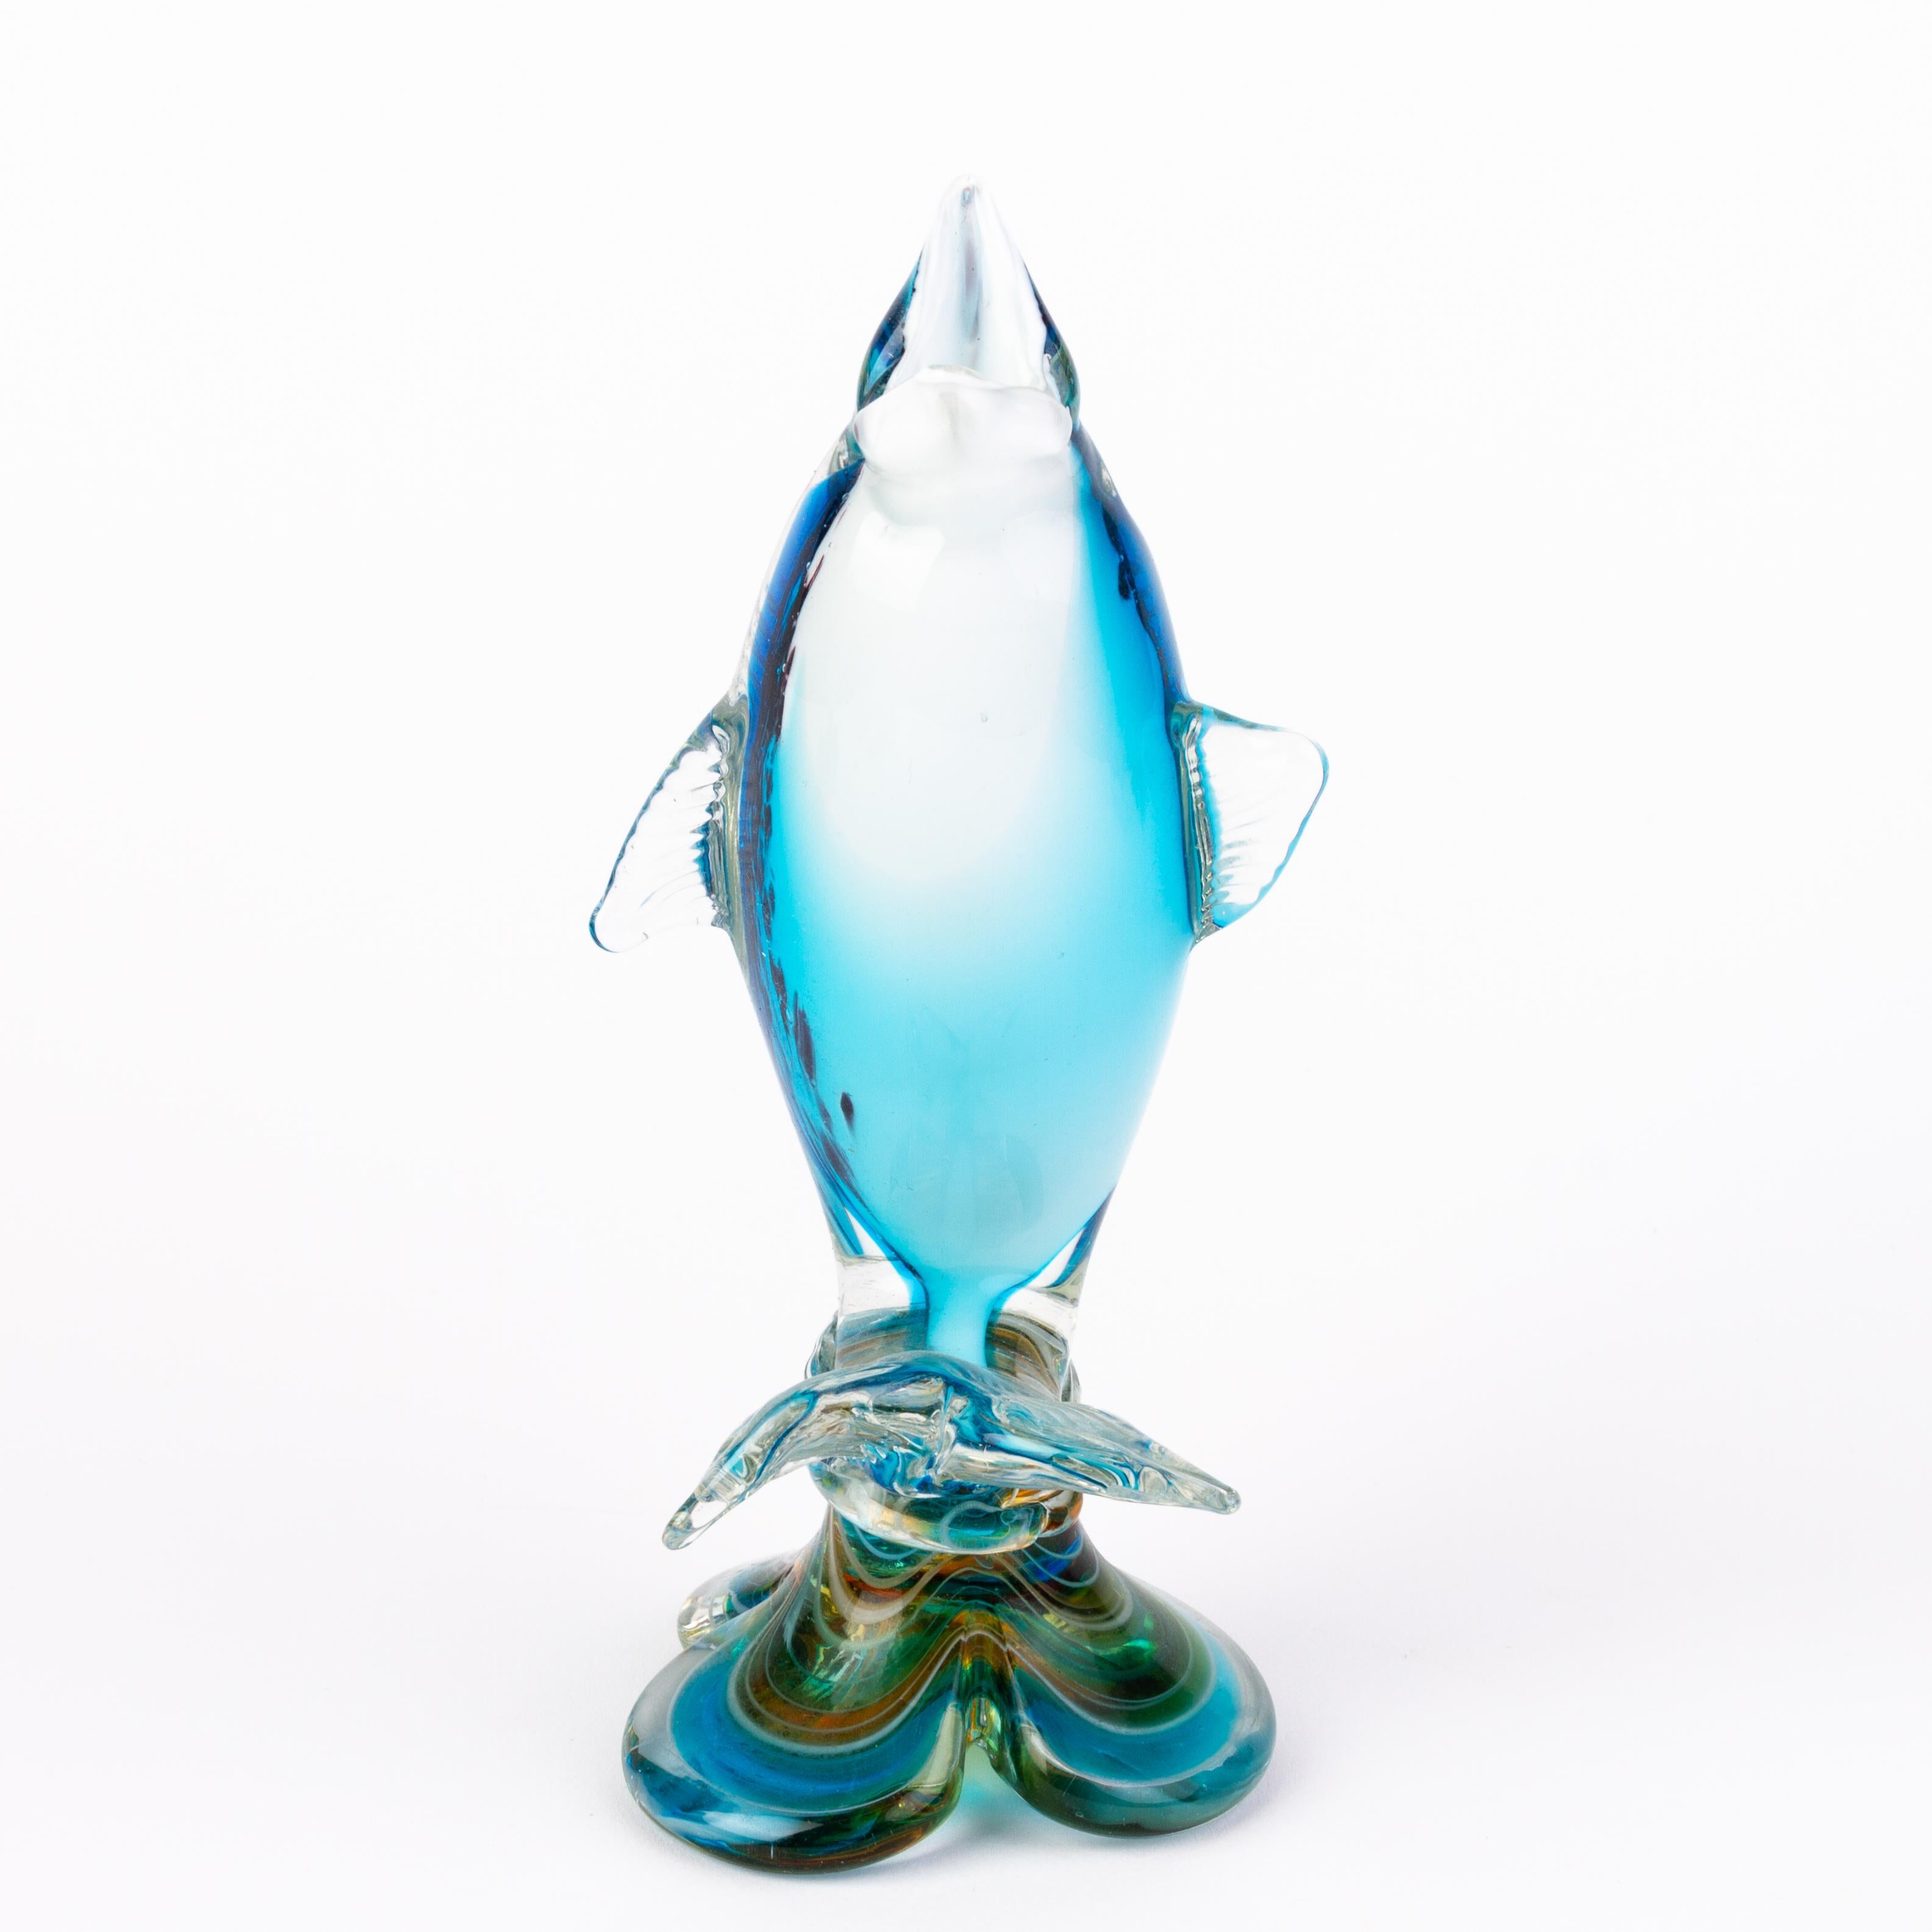 Murano Venetian Glass Sculpture Fish Vase 
Good condition
Free international shipping.